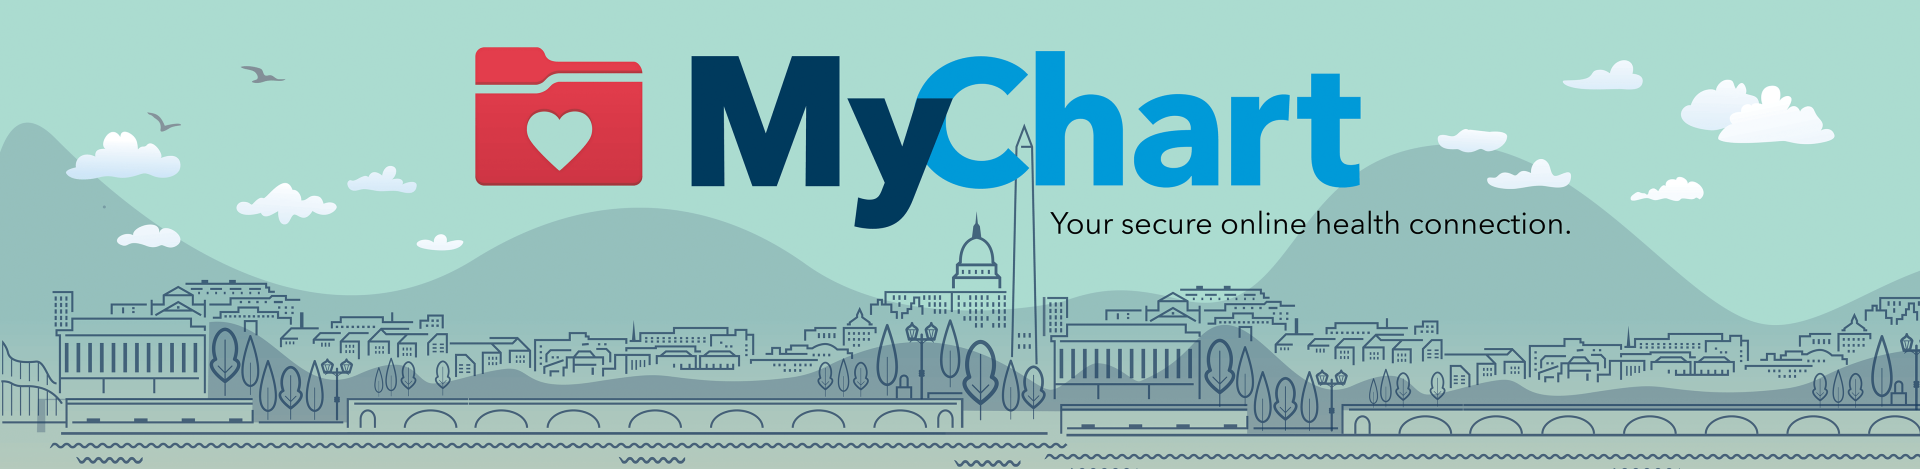 Mychart logo over skyline of DC